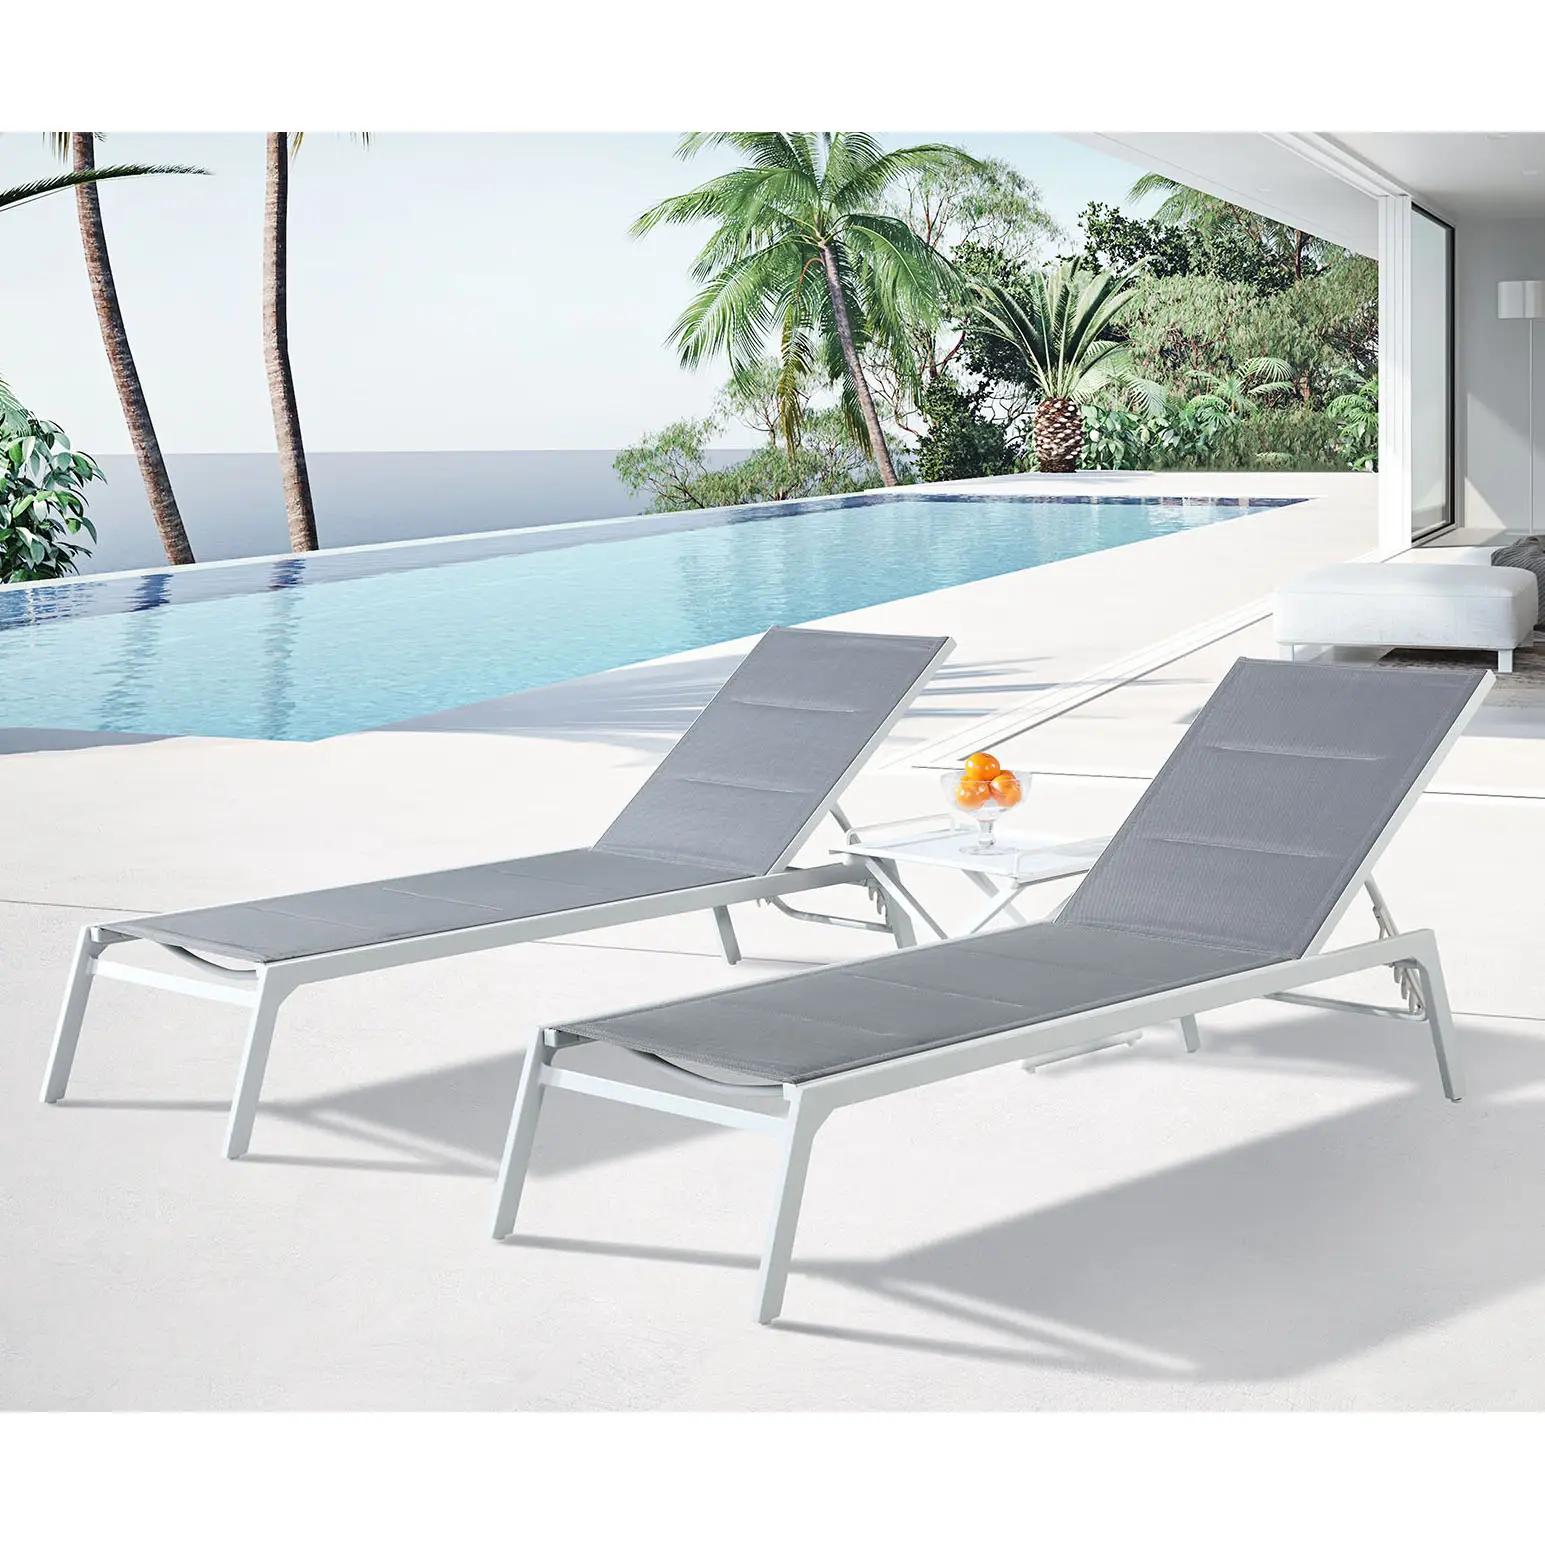 4 Stuks Stof Patio Tuinmeubilair Aluminium Texti Len Zwembad Opvouwbare Chaise Lounge Stoel Set Met Kruk En Lade